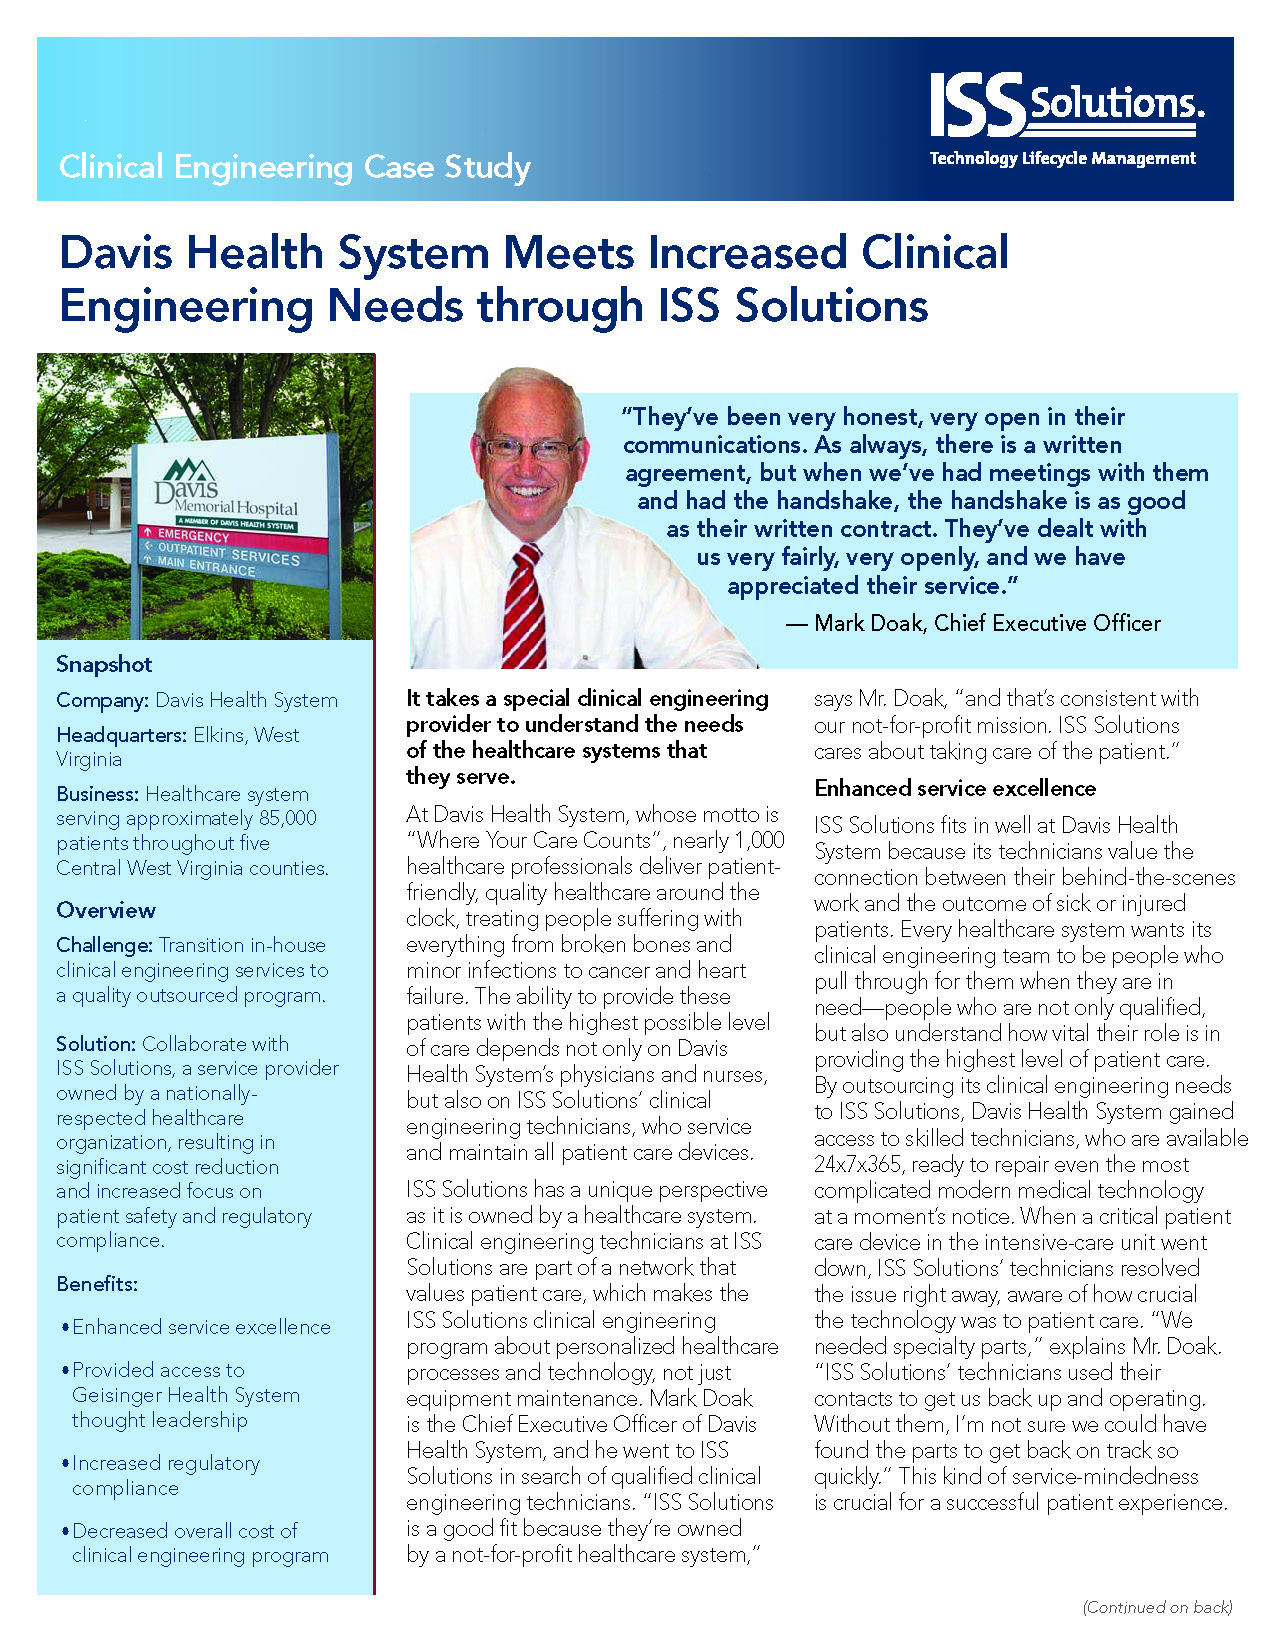 Davis Health System Case Study ISS